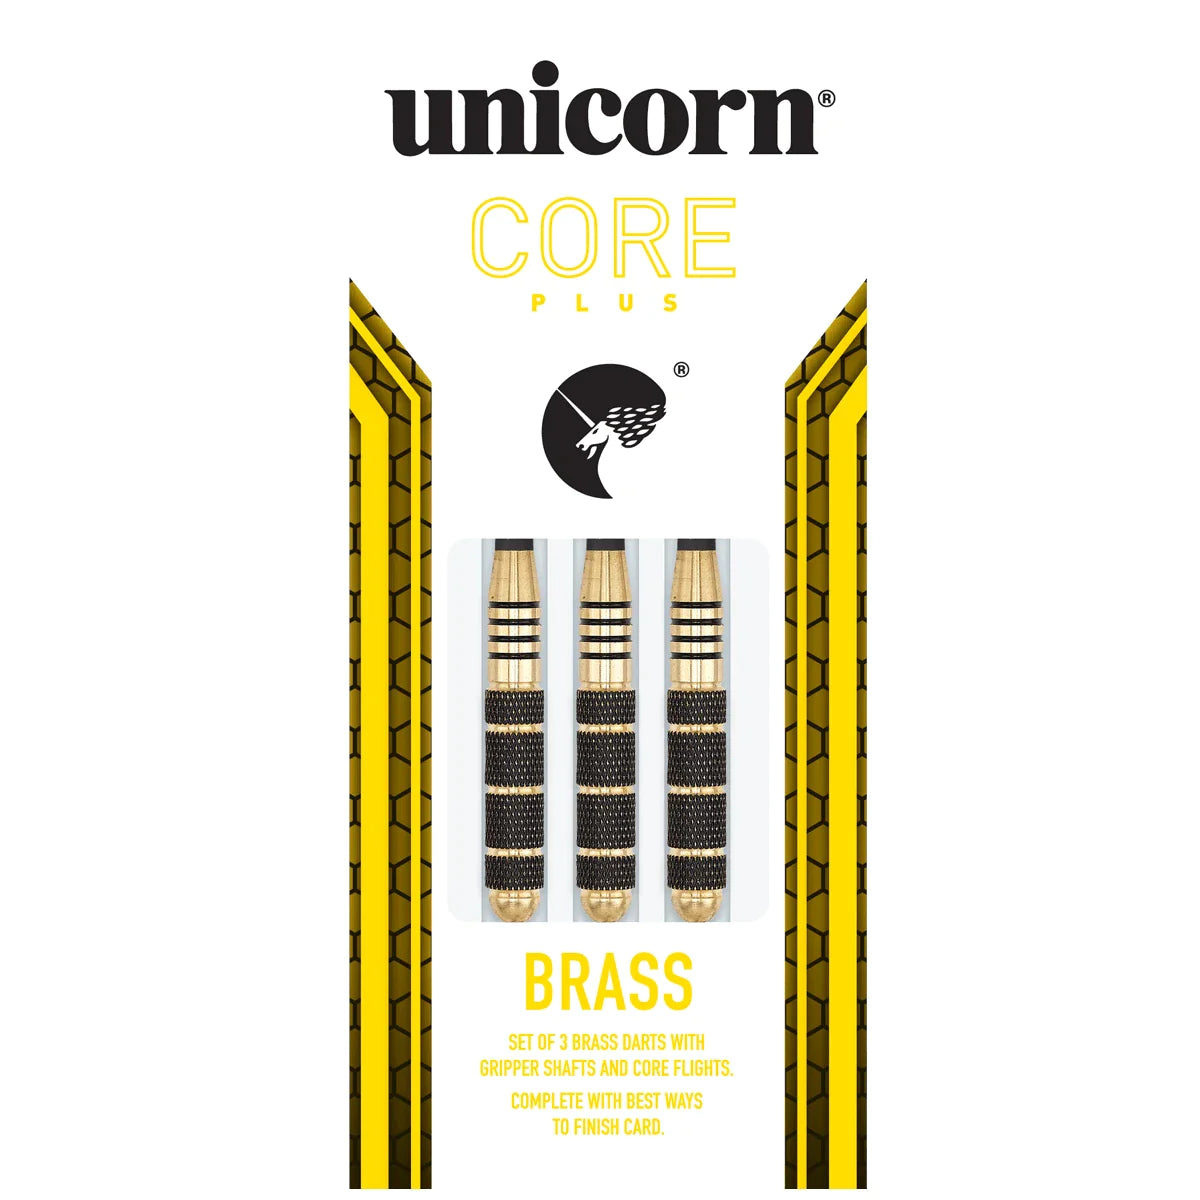 Unicorn Core Plus Brass 27g Darts